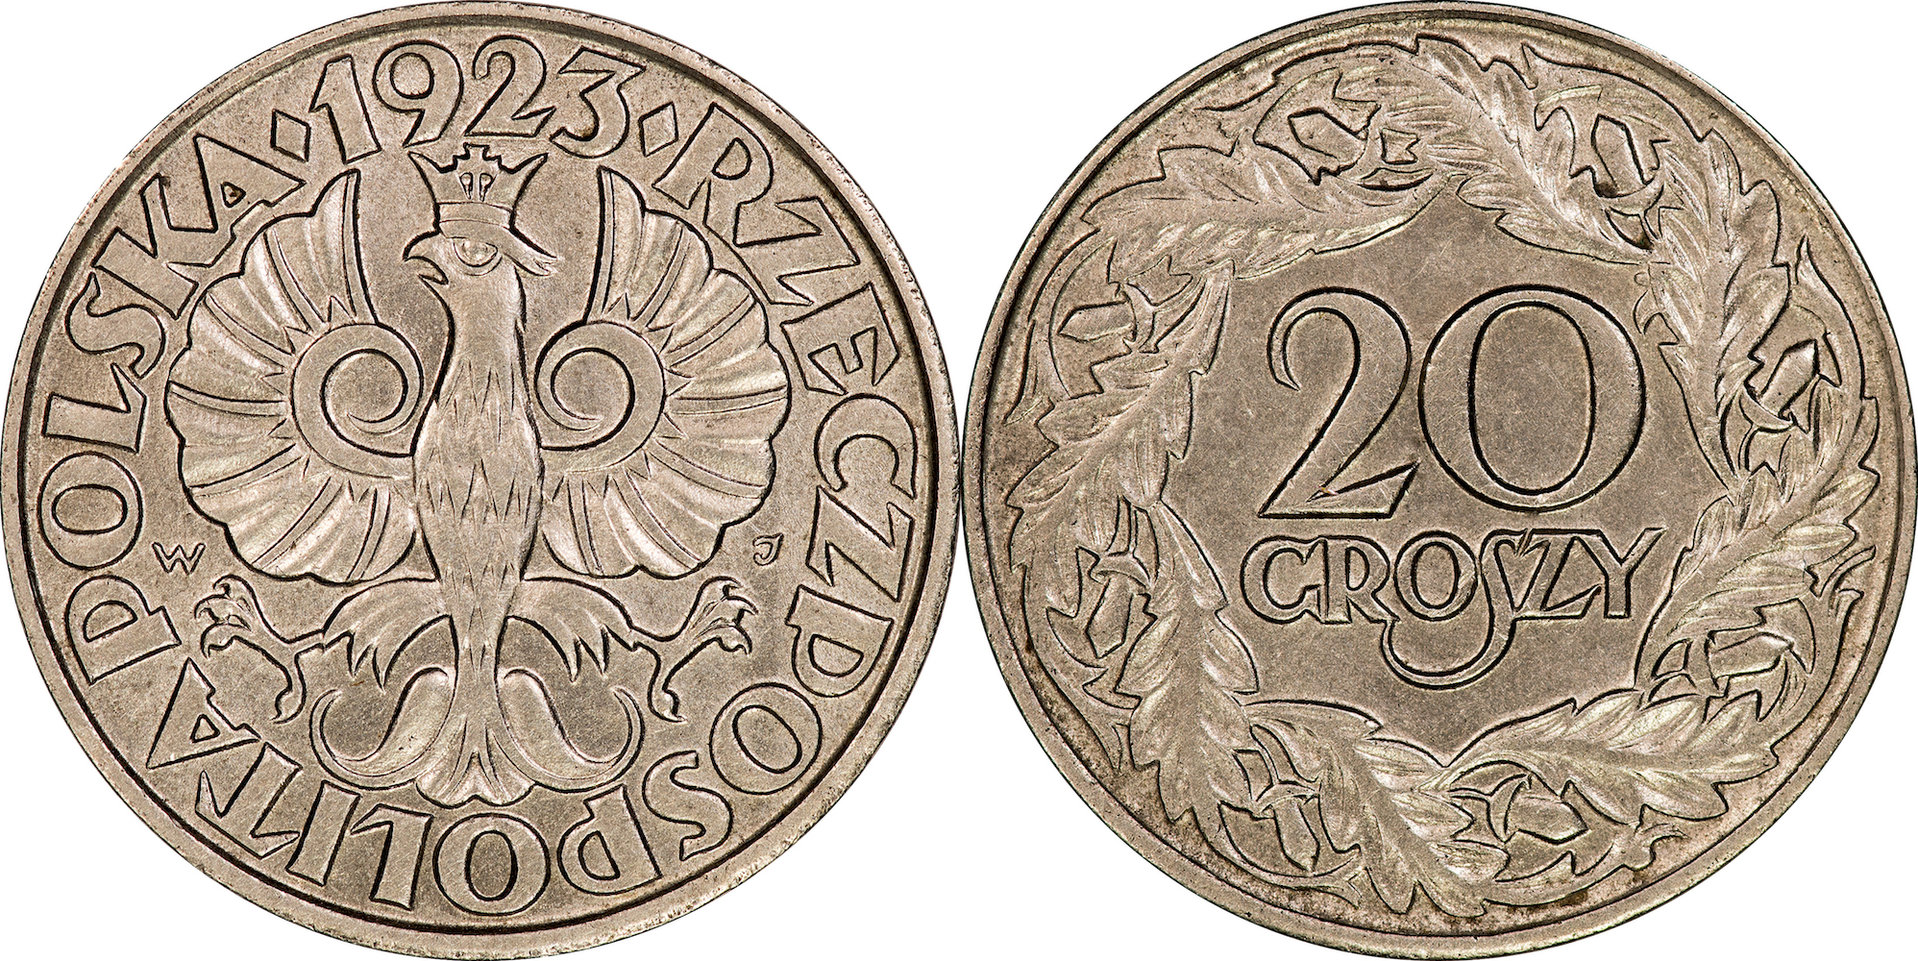 Poland - 1923 20 Groszy.jpg